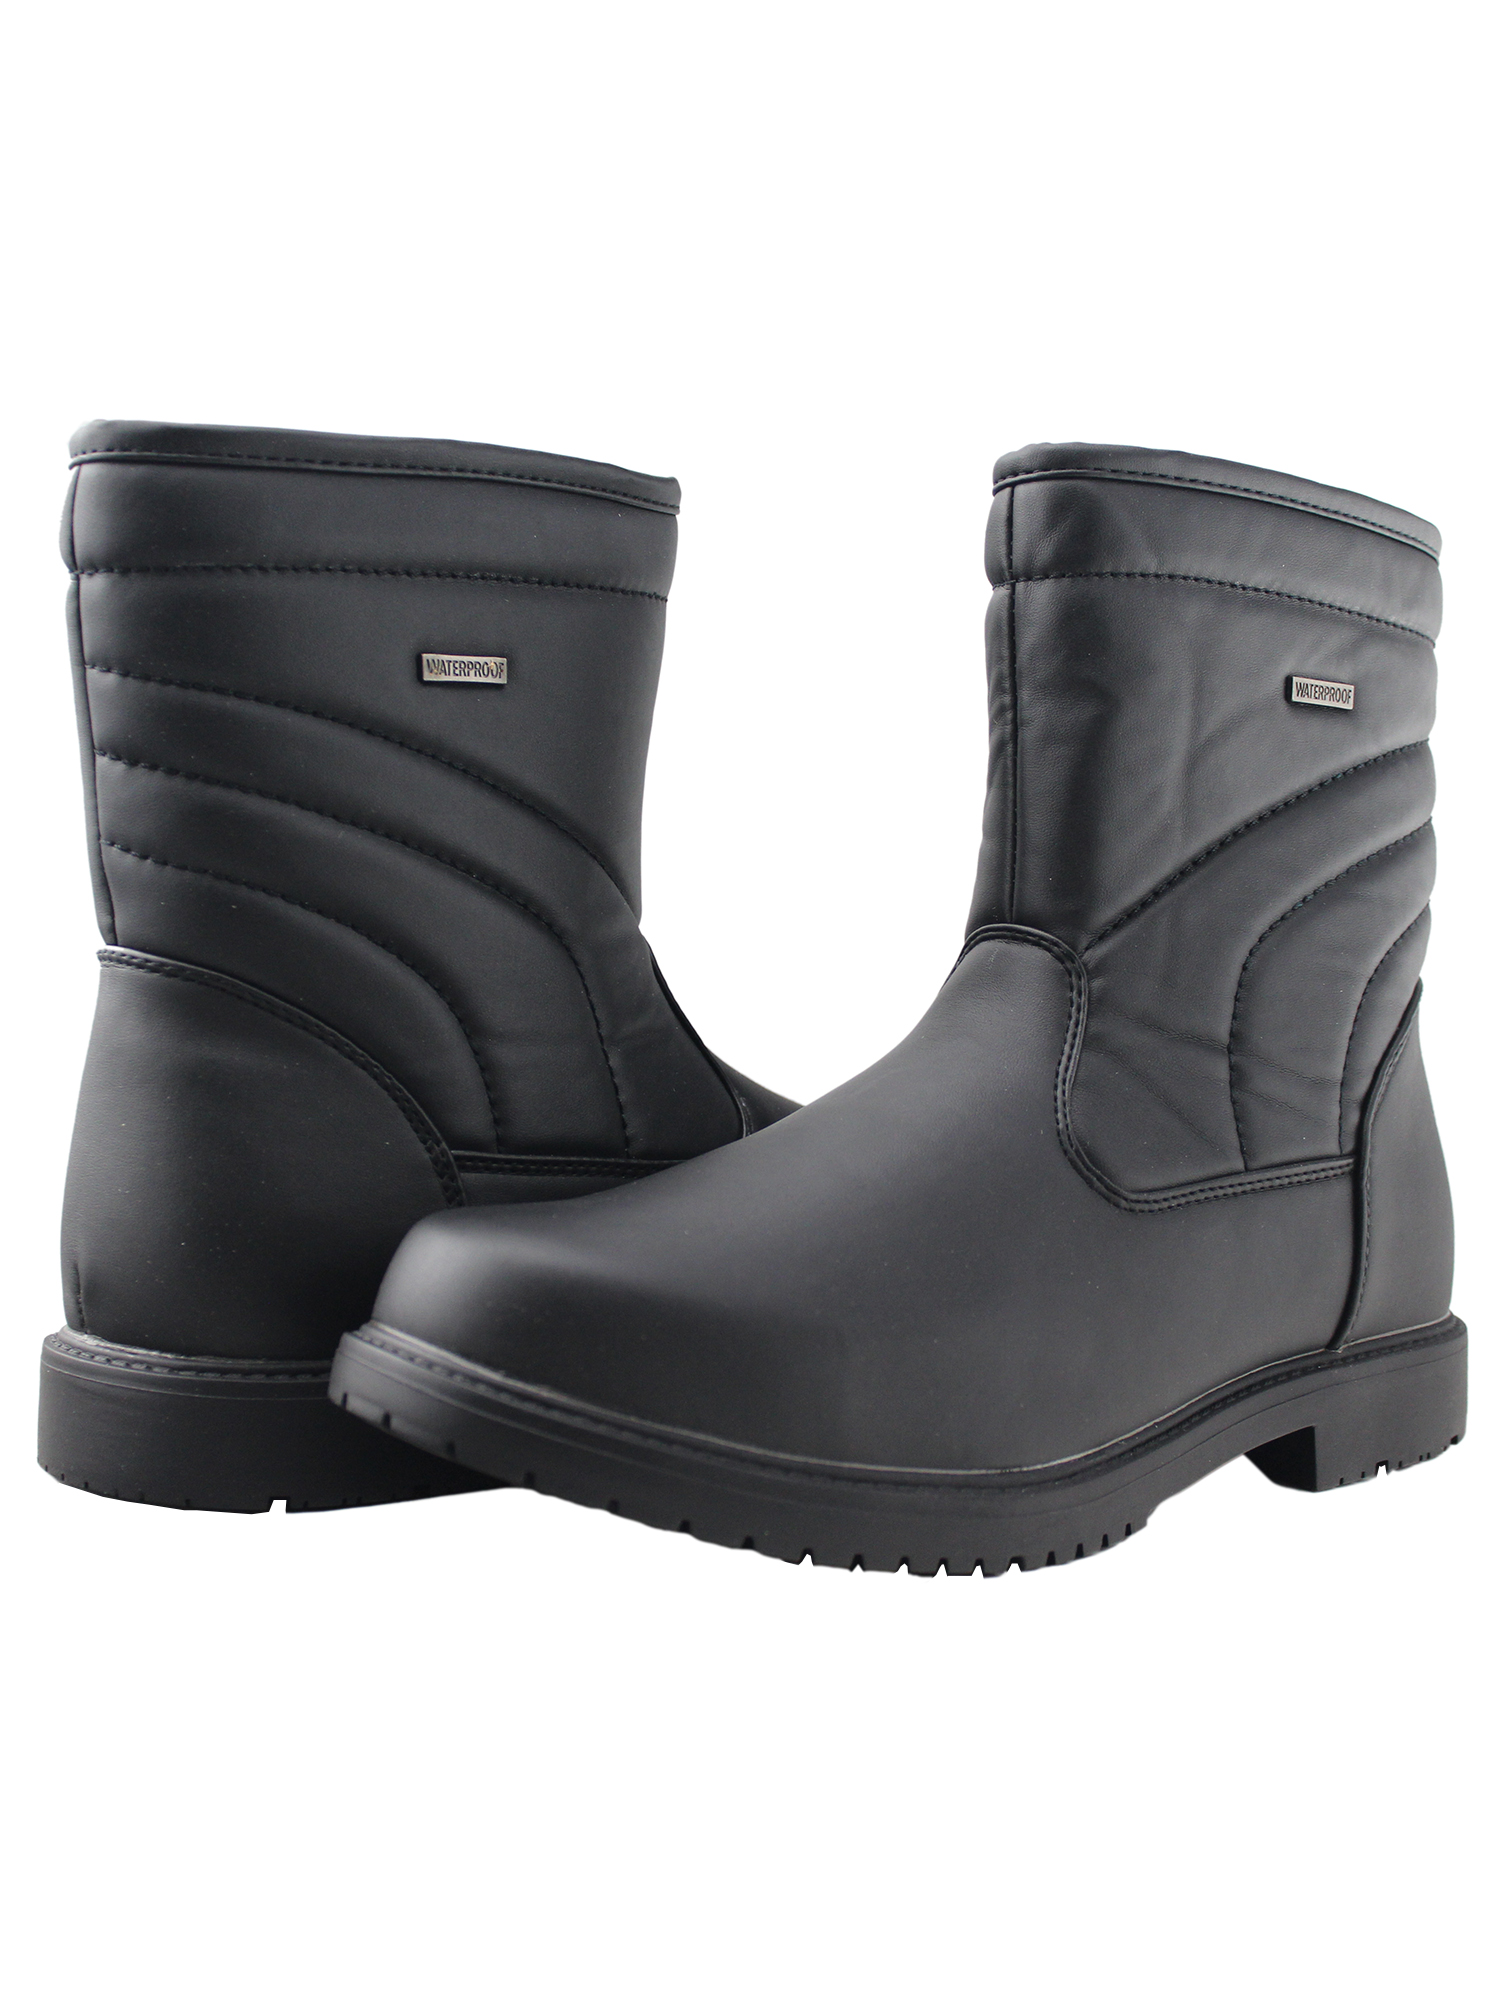 Tanleewa Men's Winter Boots Fur Lining Waterproof Non Slip Snow Boots Side Zipper Shoe Size 8 - image 1 of 6